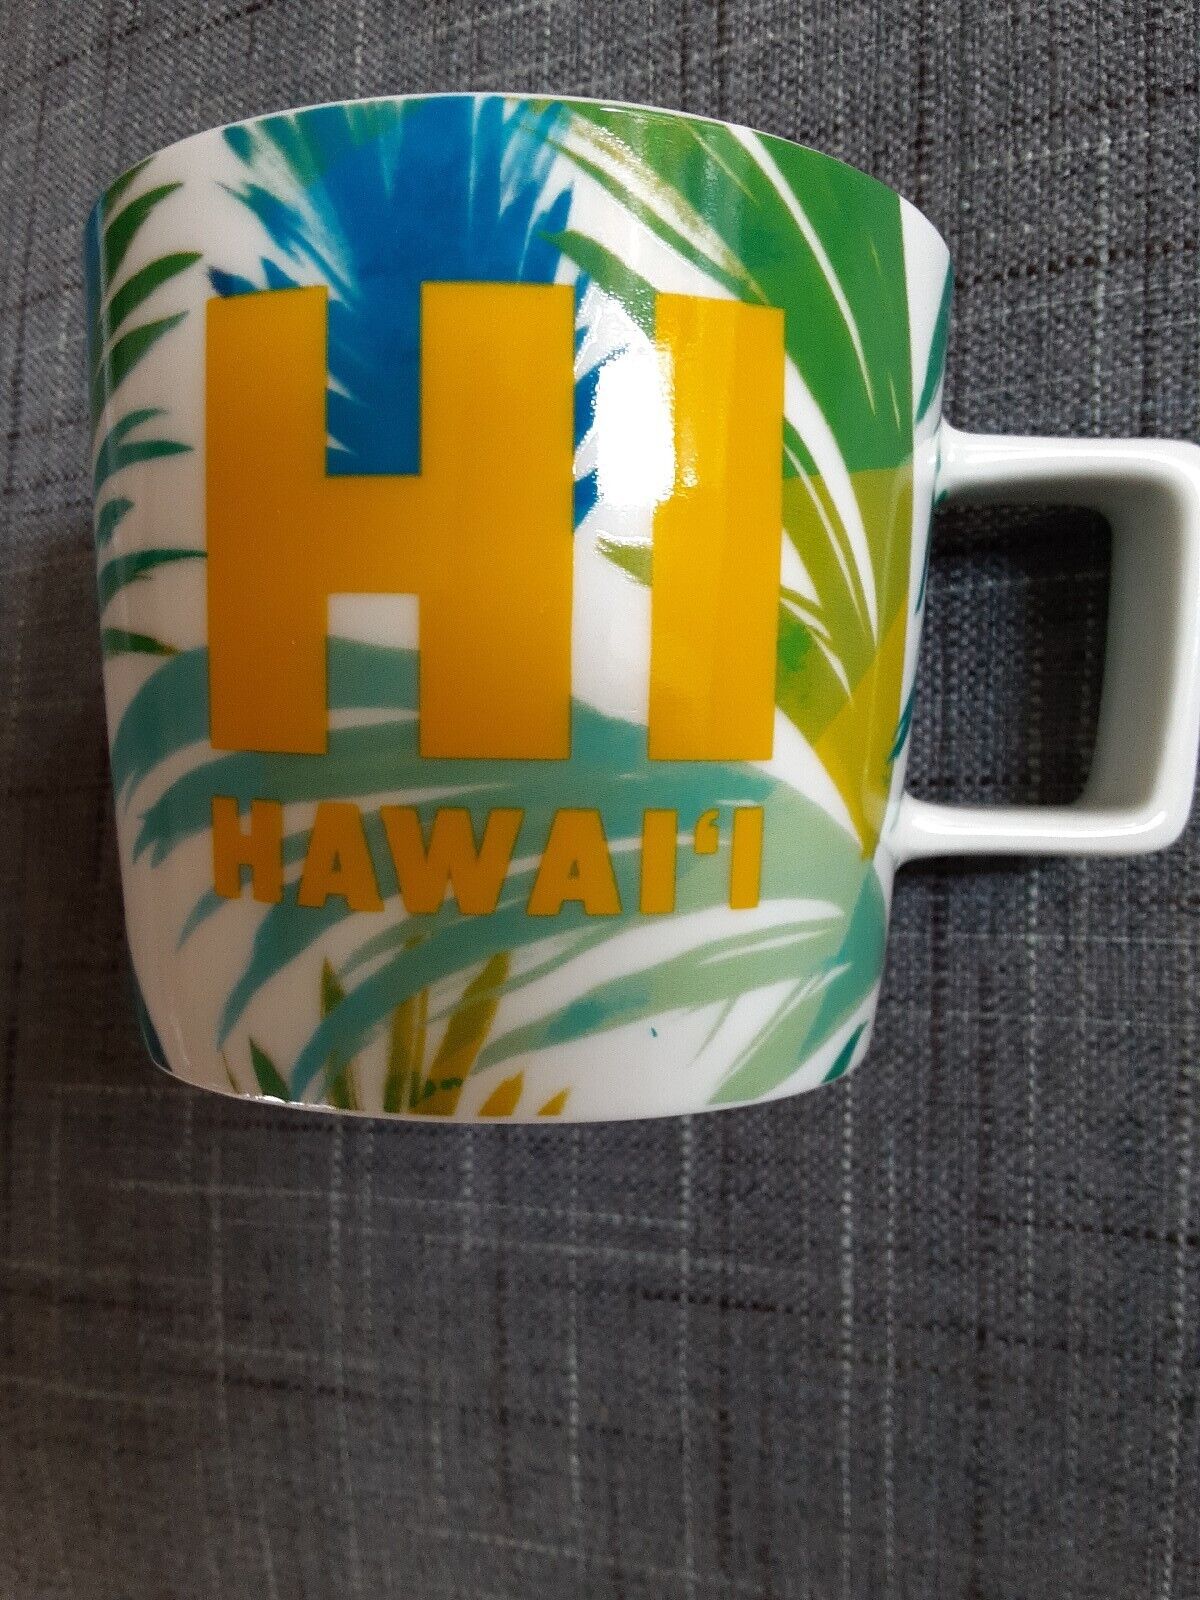 Starbucks HI Hawaii Collection 2016 Coffee Mug Cup 14 oz Yellow Blue Green